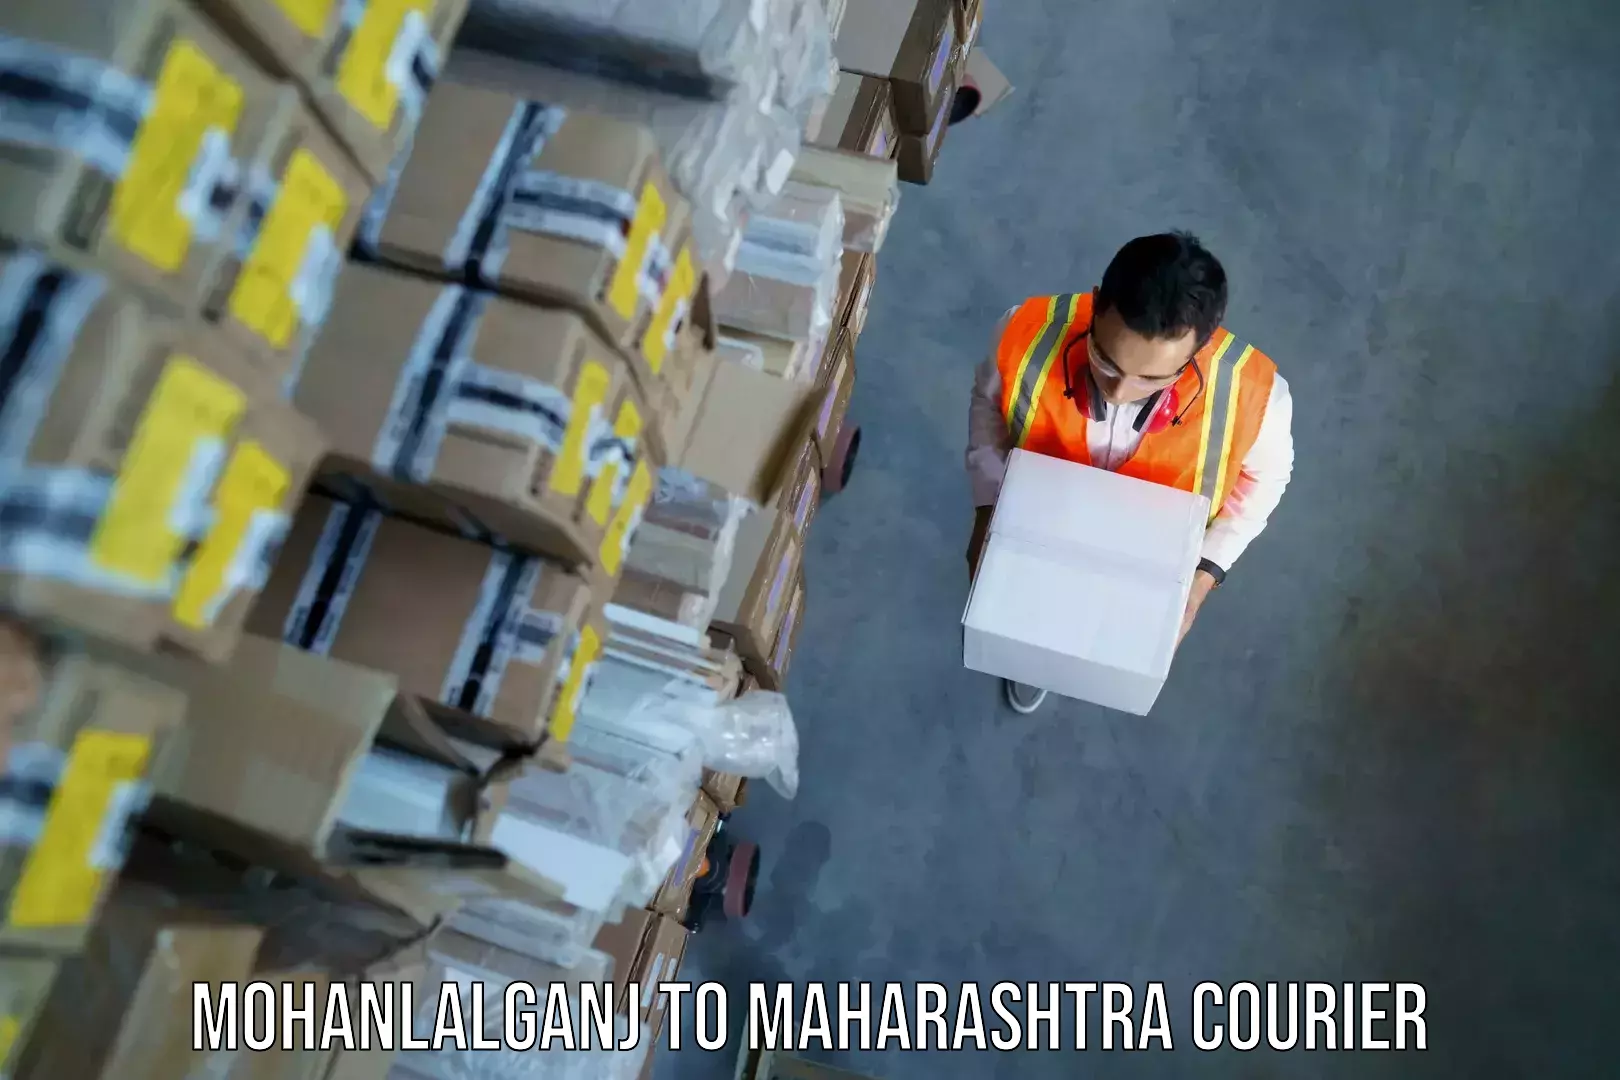 Baggage shipping service Mohanlalganj to Pune